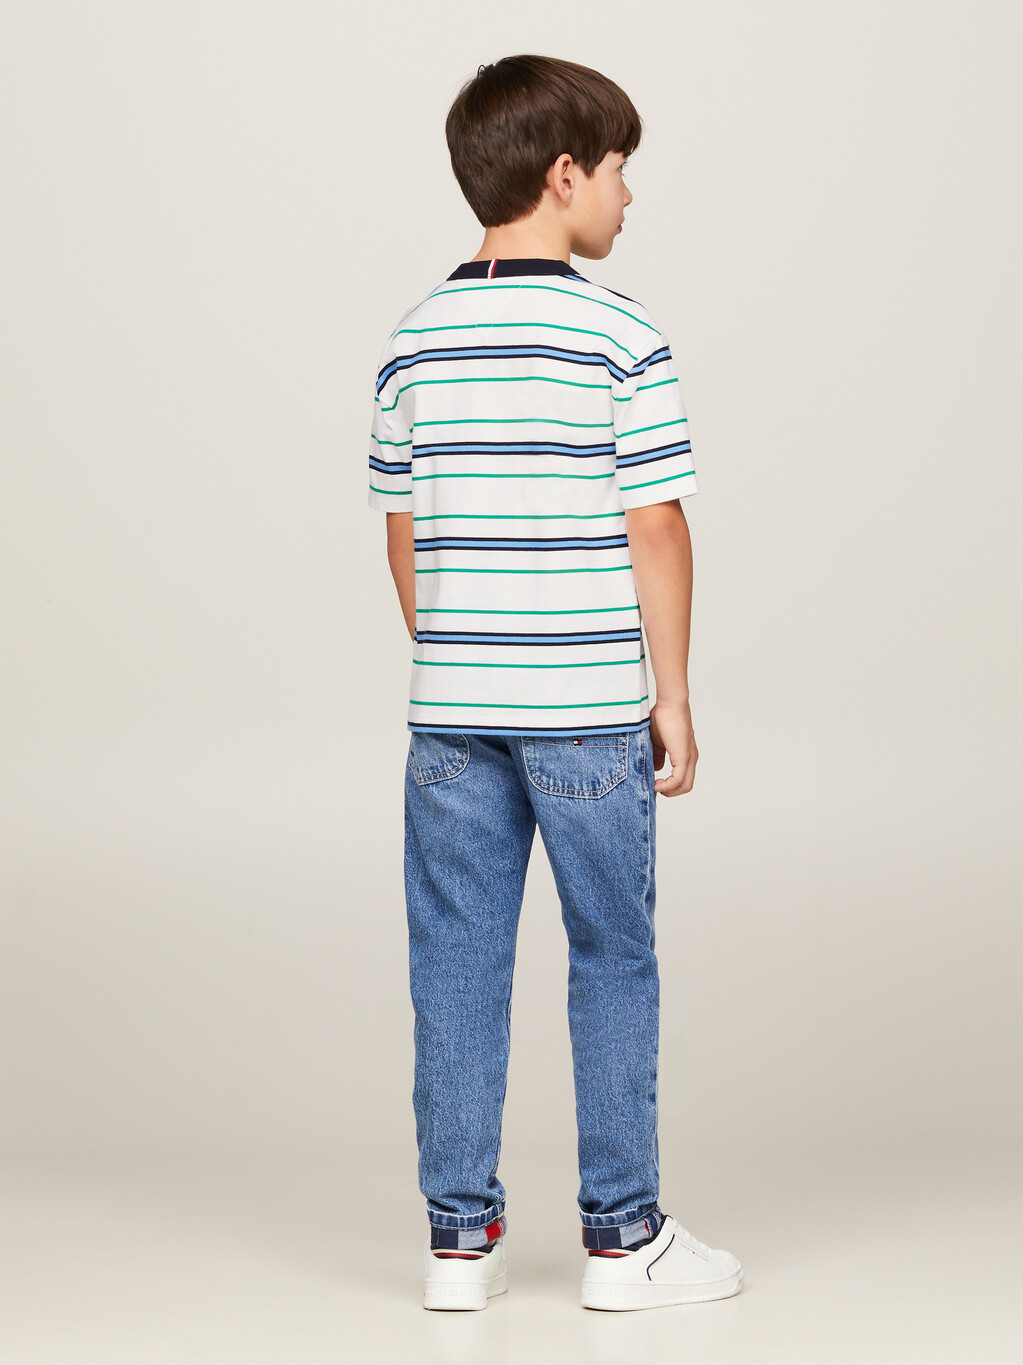 Hilfiger Monotype Stripe T-Shirt, White Base/Green Stripe, hi-res